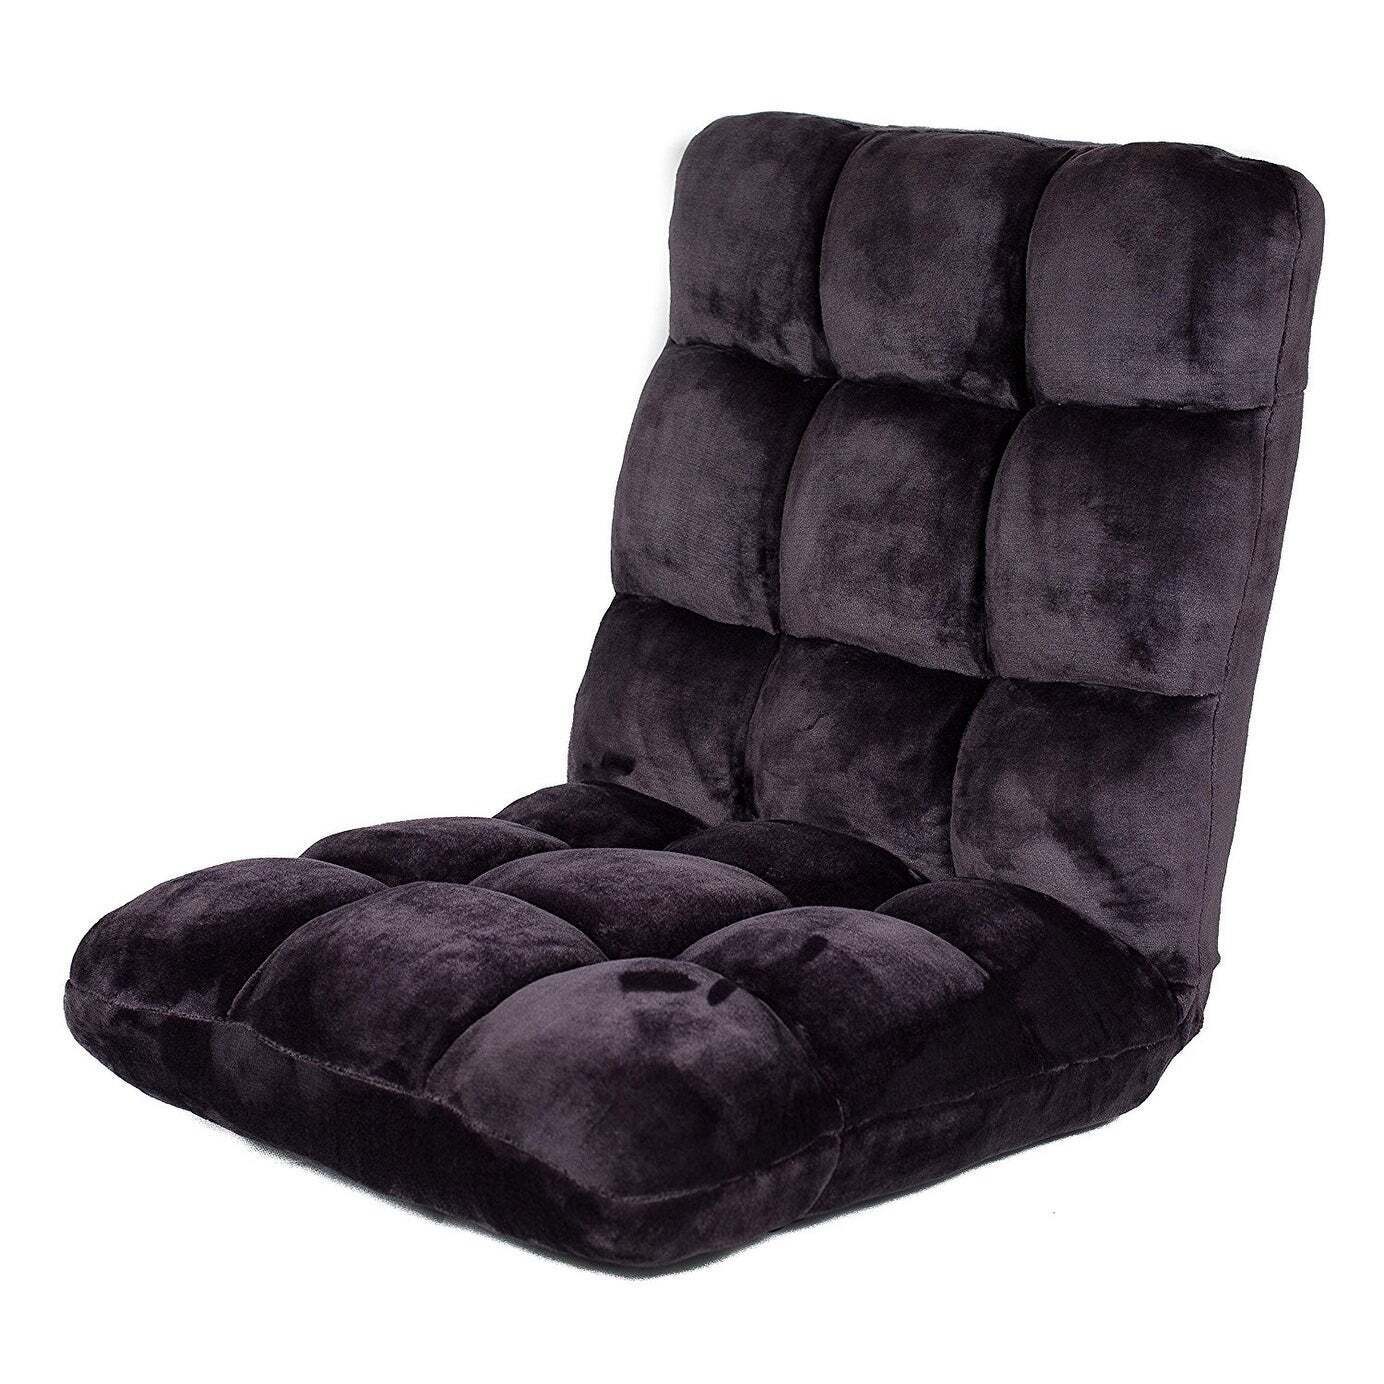 BirdRock Home Adjustable 14 Position Memory Foam Chair